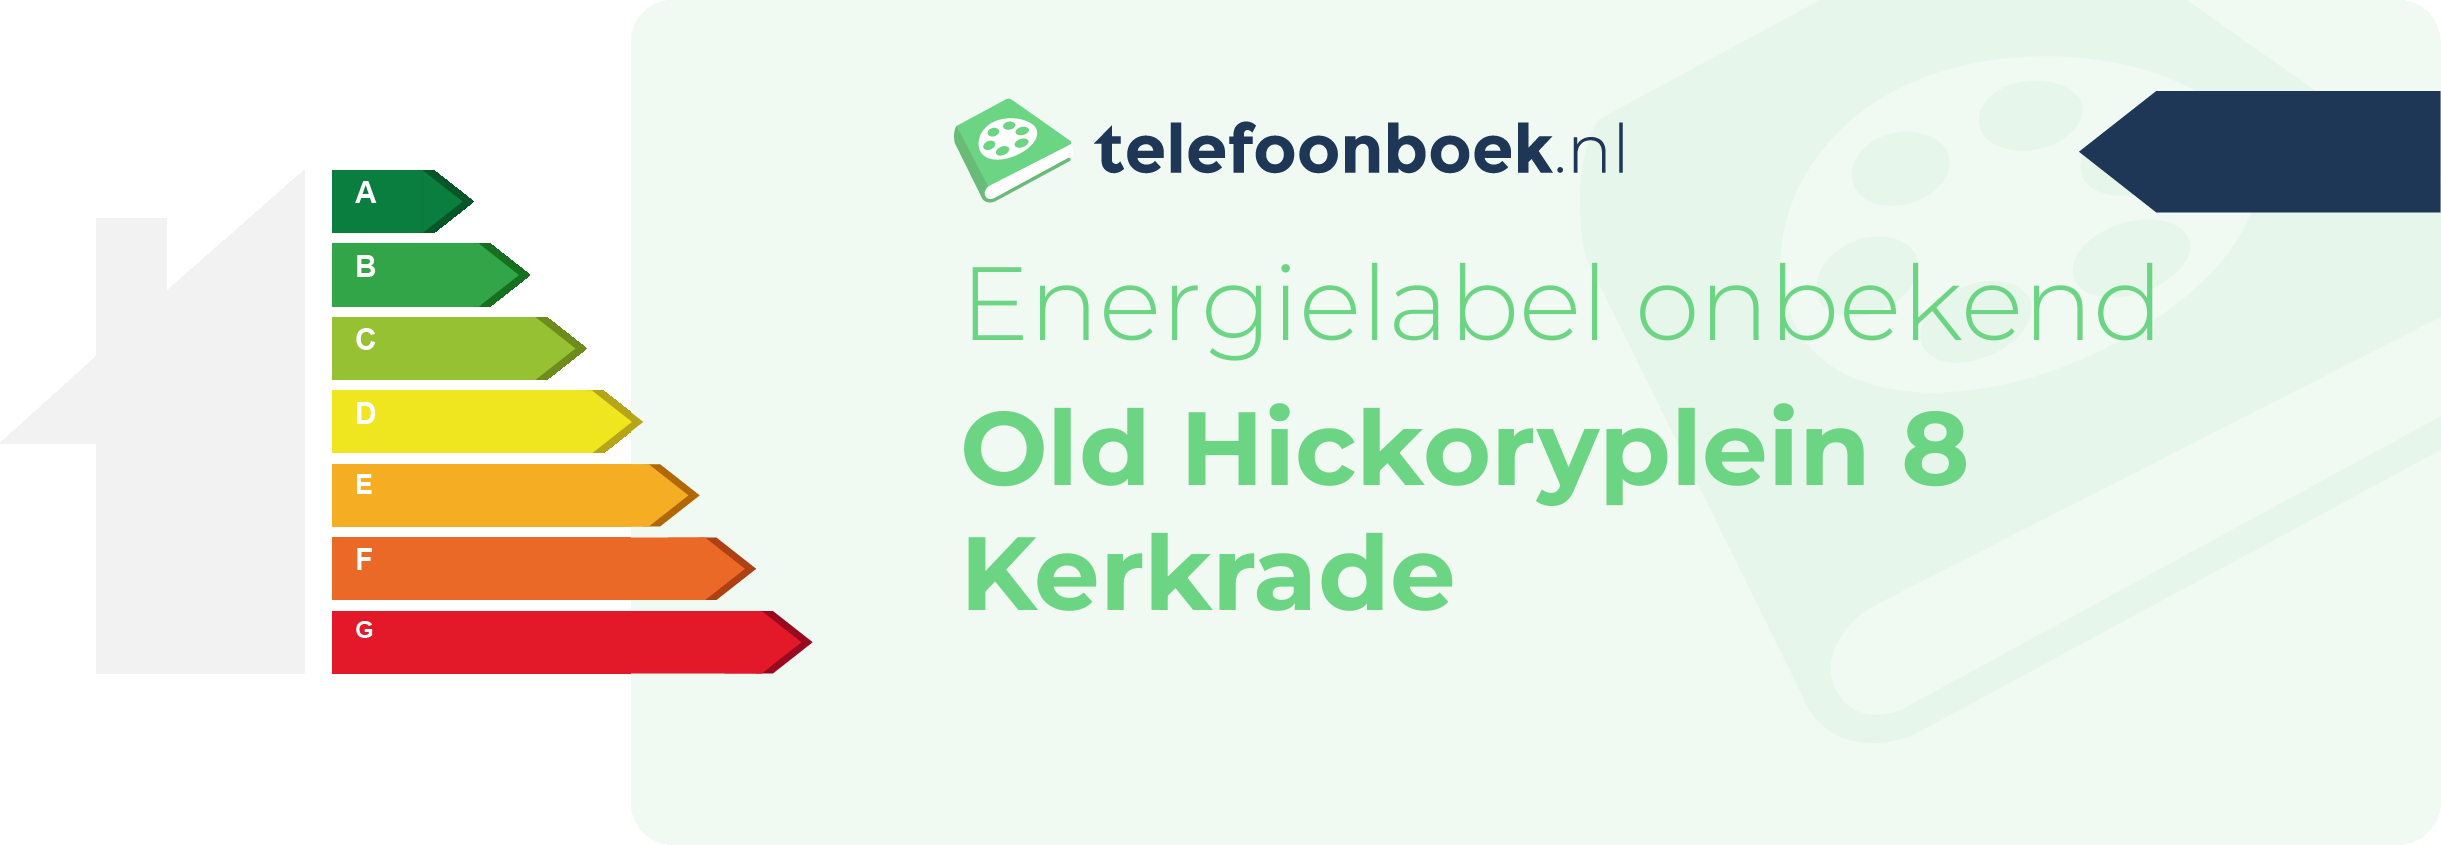 Energielabel Old Hickoryplein 8 Kerkrade